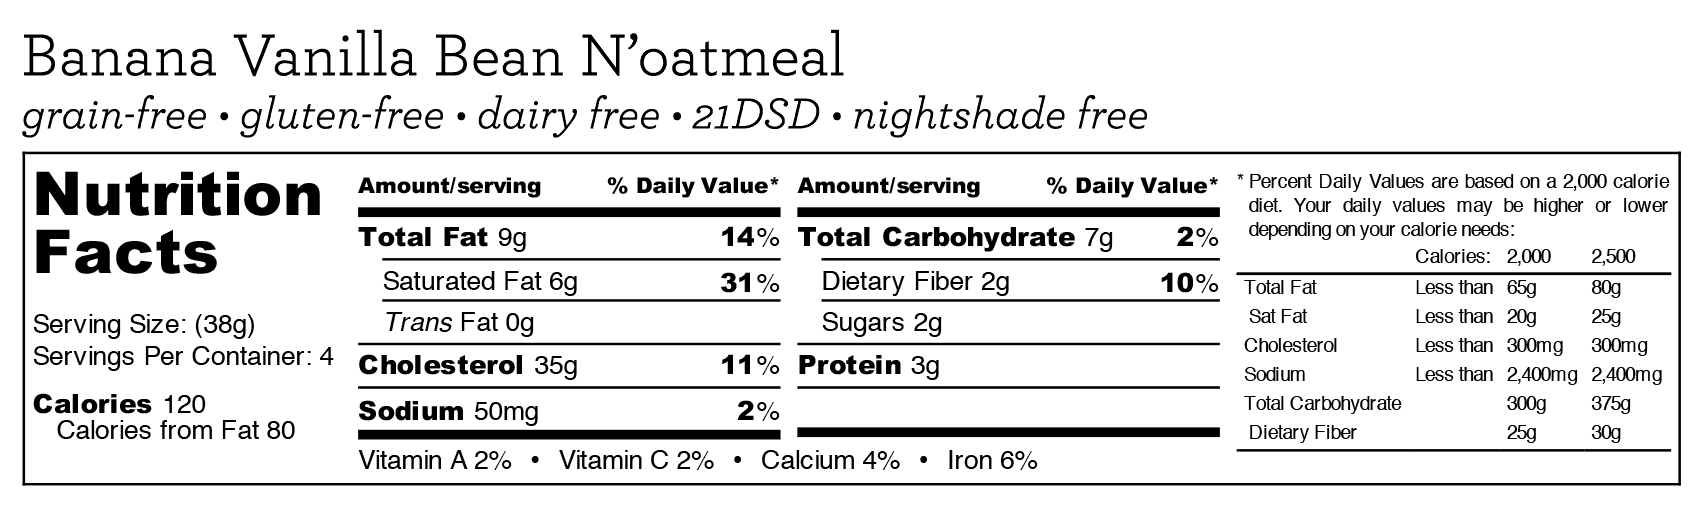 21DSDCB_VanillaBean_Nutrition-Facts_Vertical